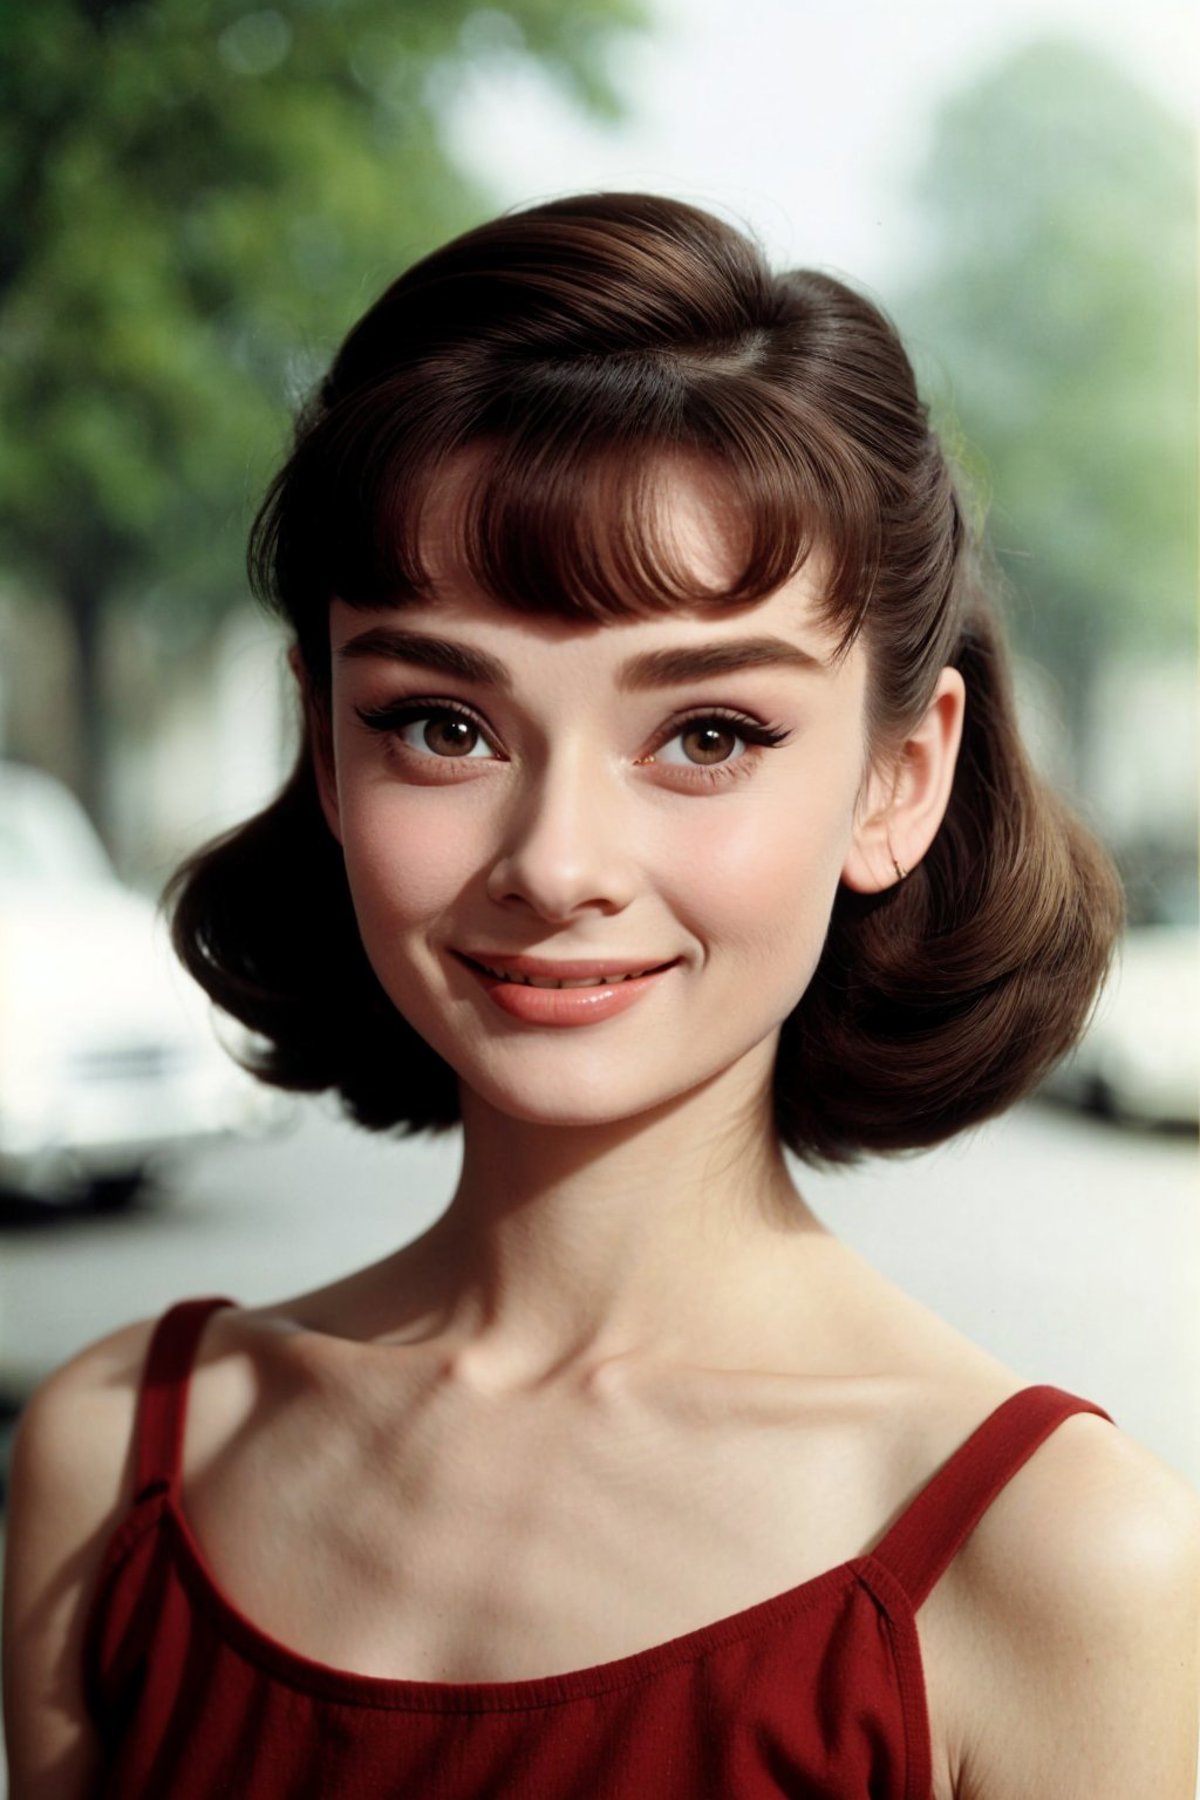 Audrey Hepburn image by demoran